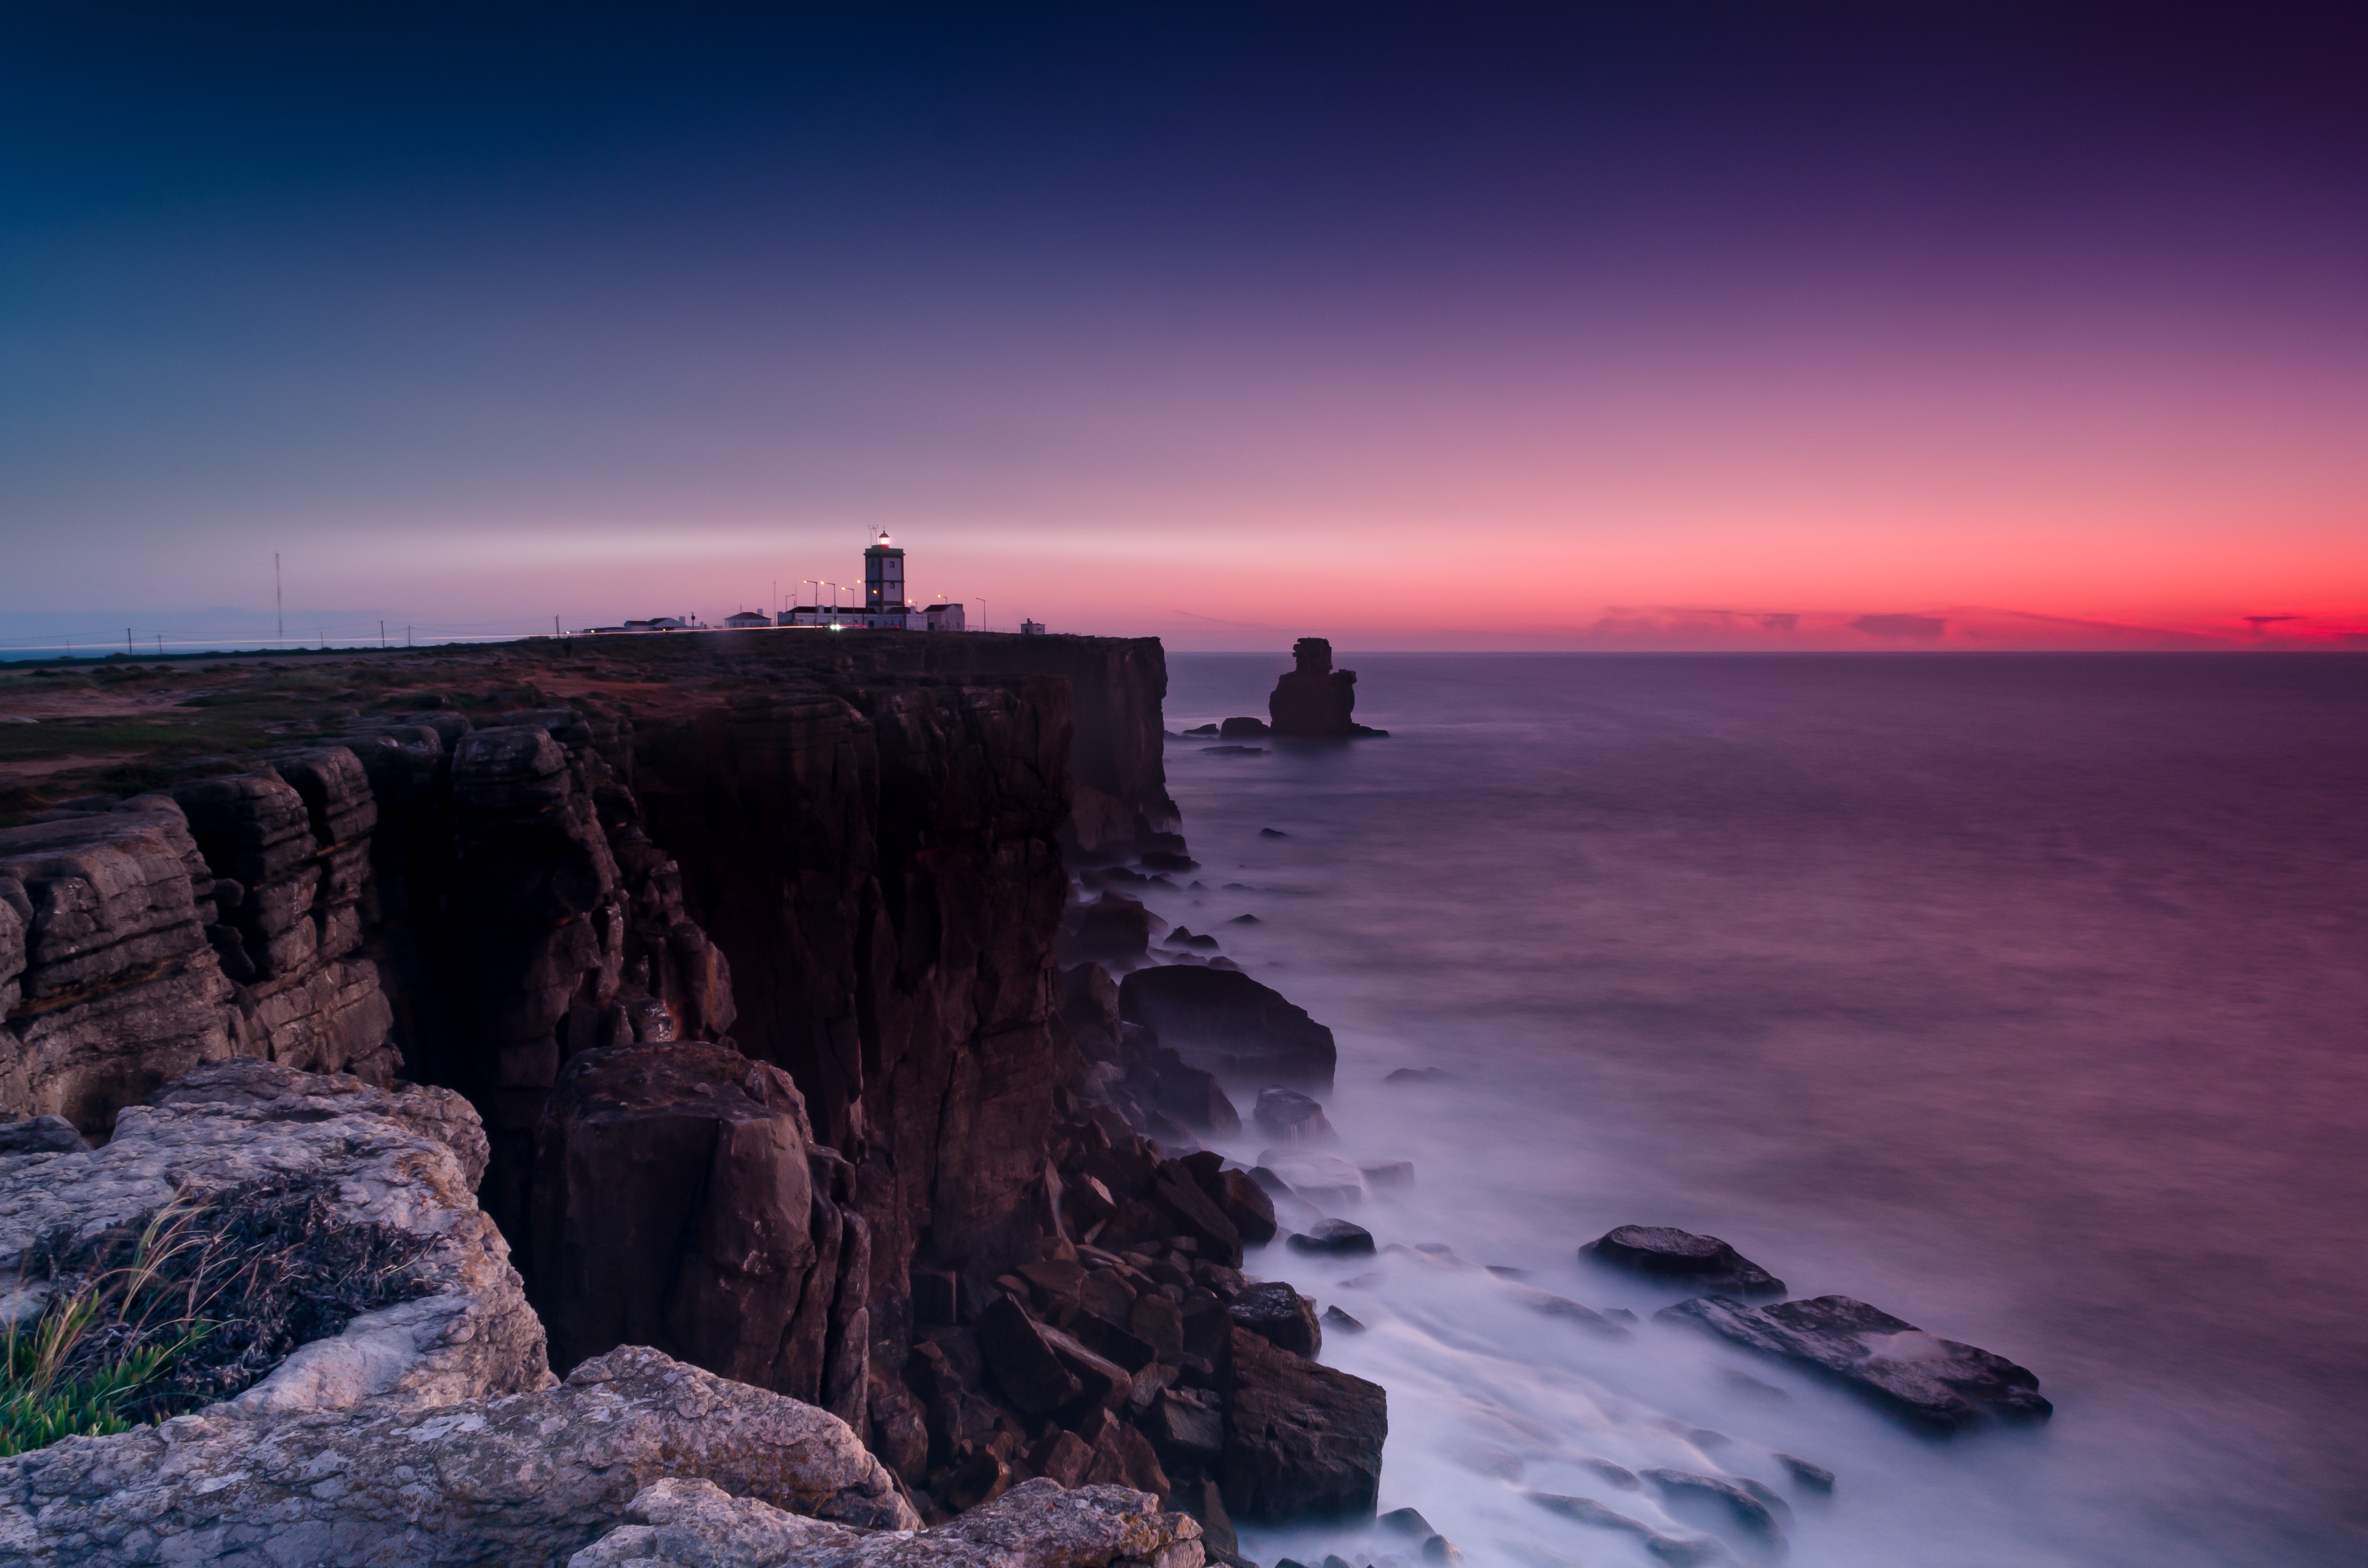 Scenic view of ocean near cliffs during dawn photo